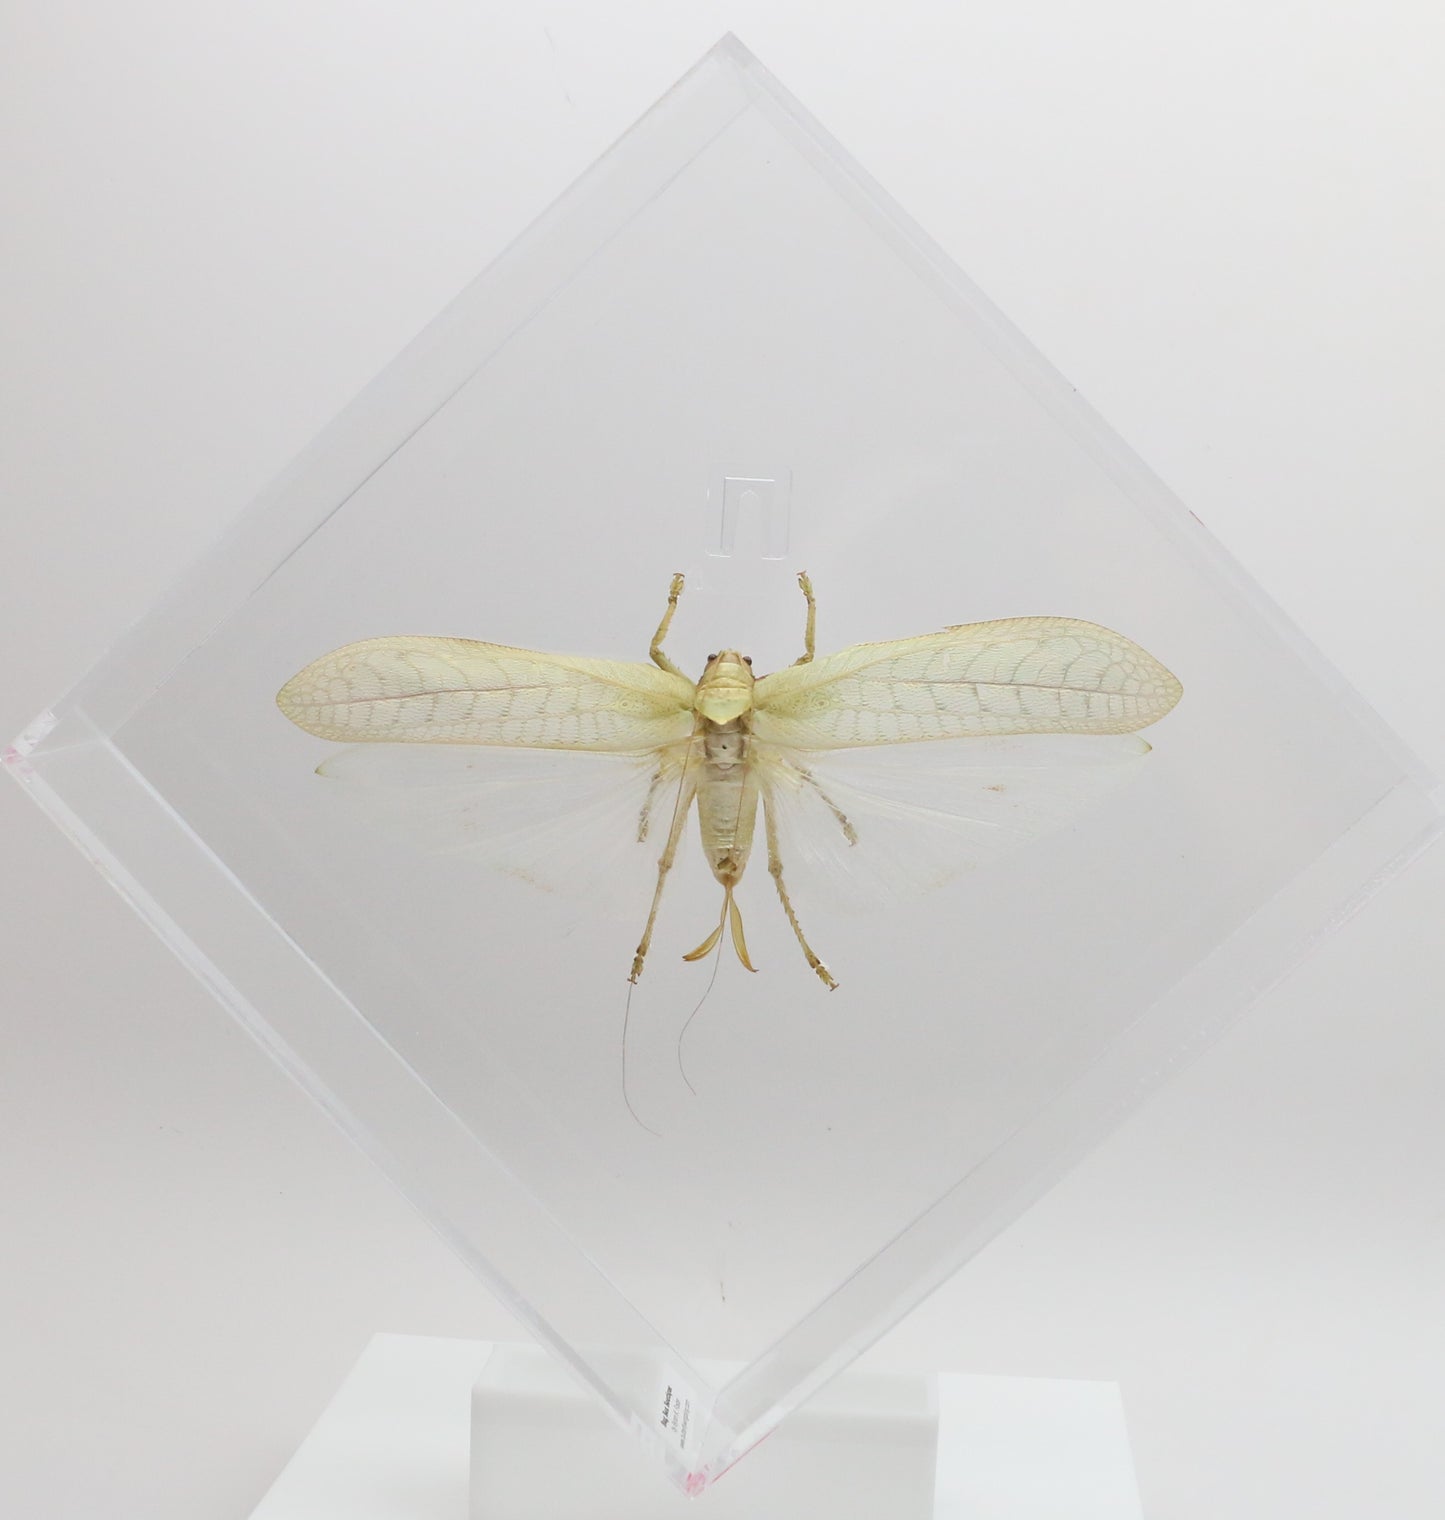 9101052 - Real Bug Acrylic Display Box - 10" X 10" - Giant Katydid